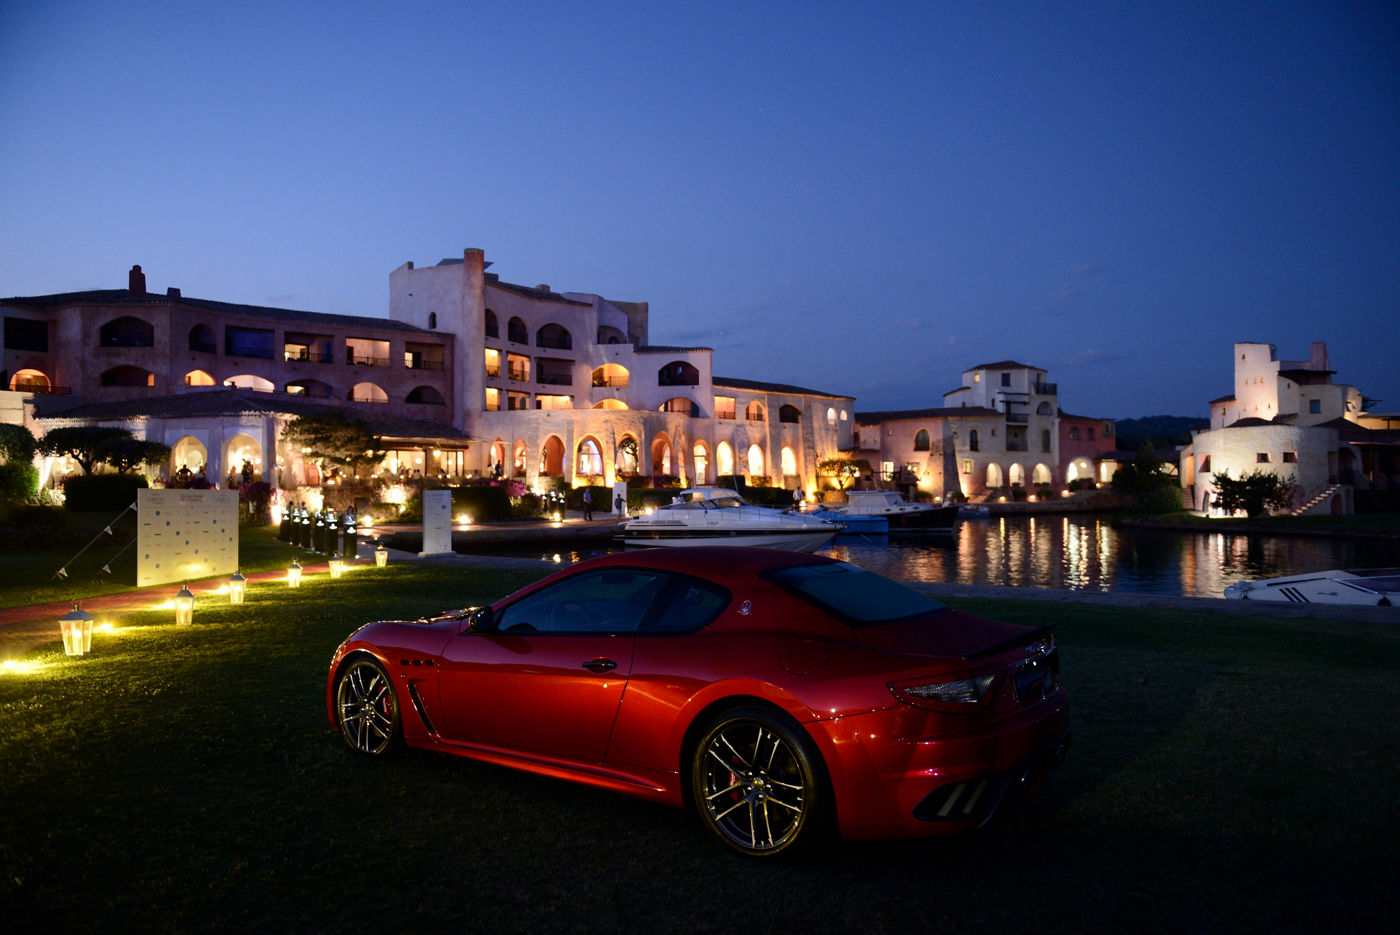 Maserati-GranTurismo-on-display-at-Cala-di-Volpe-Hotel---Costa-Smeralda-Invitational-Gala-Dinner